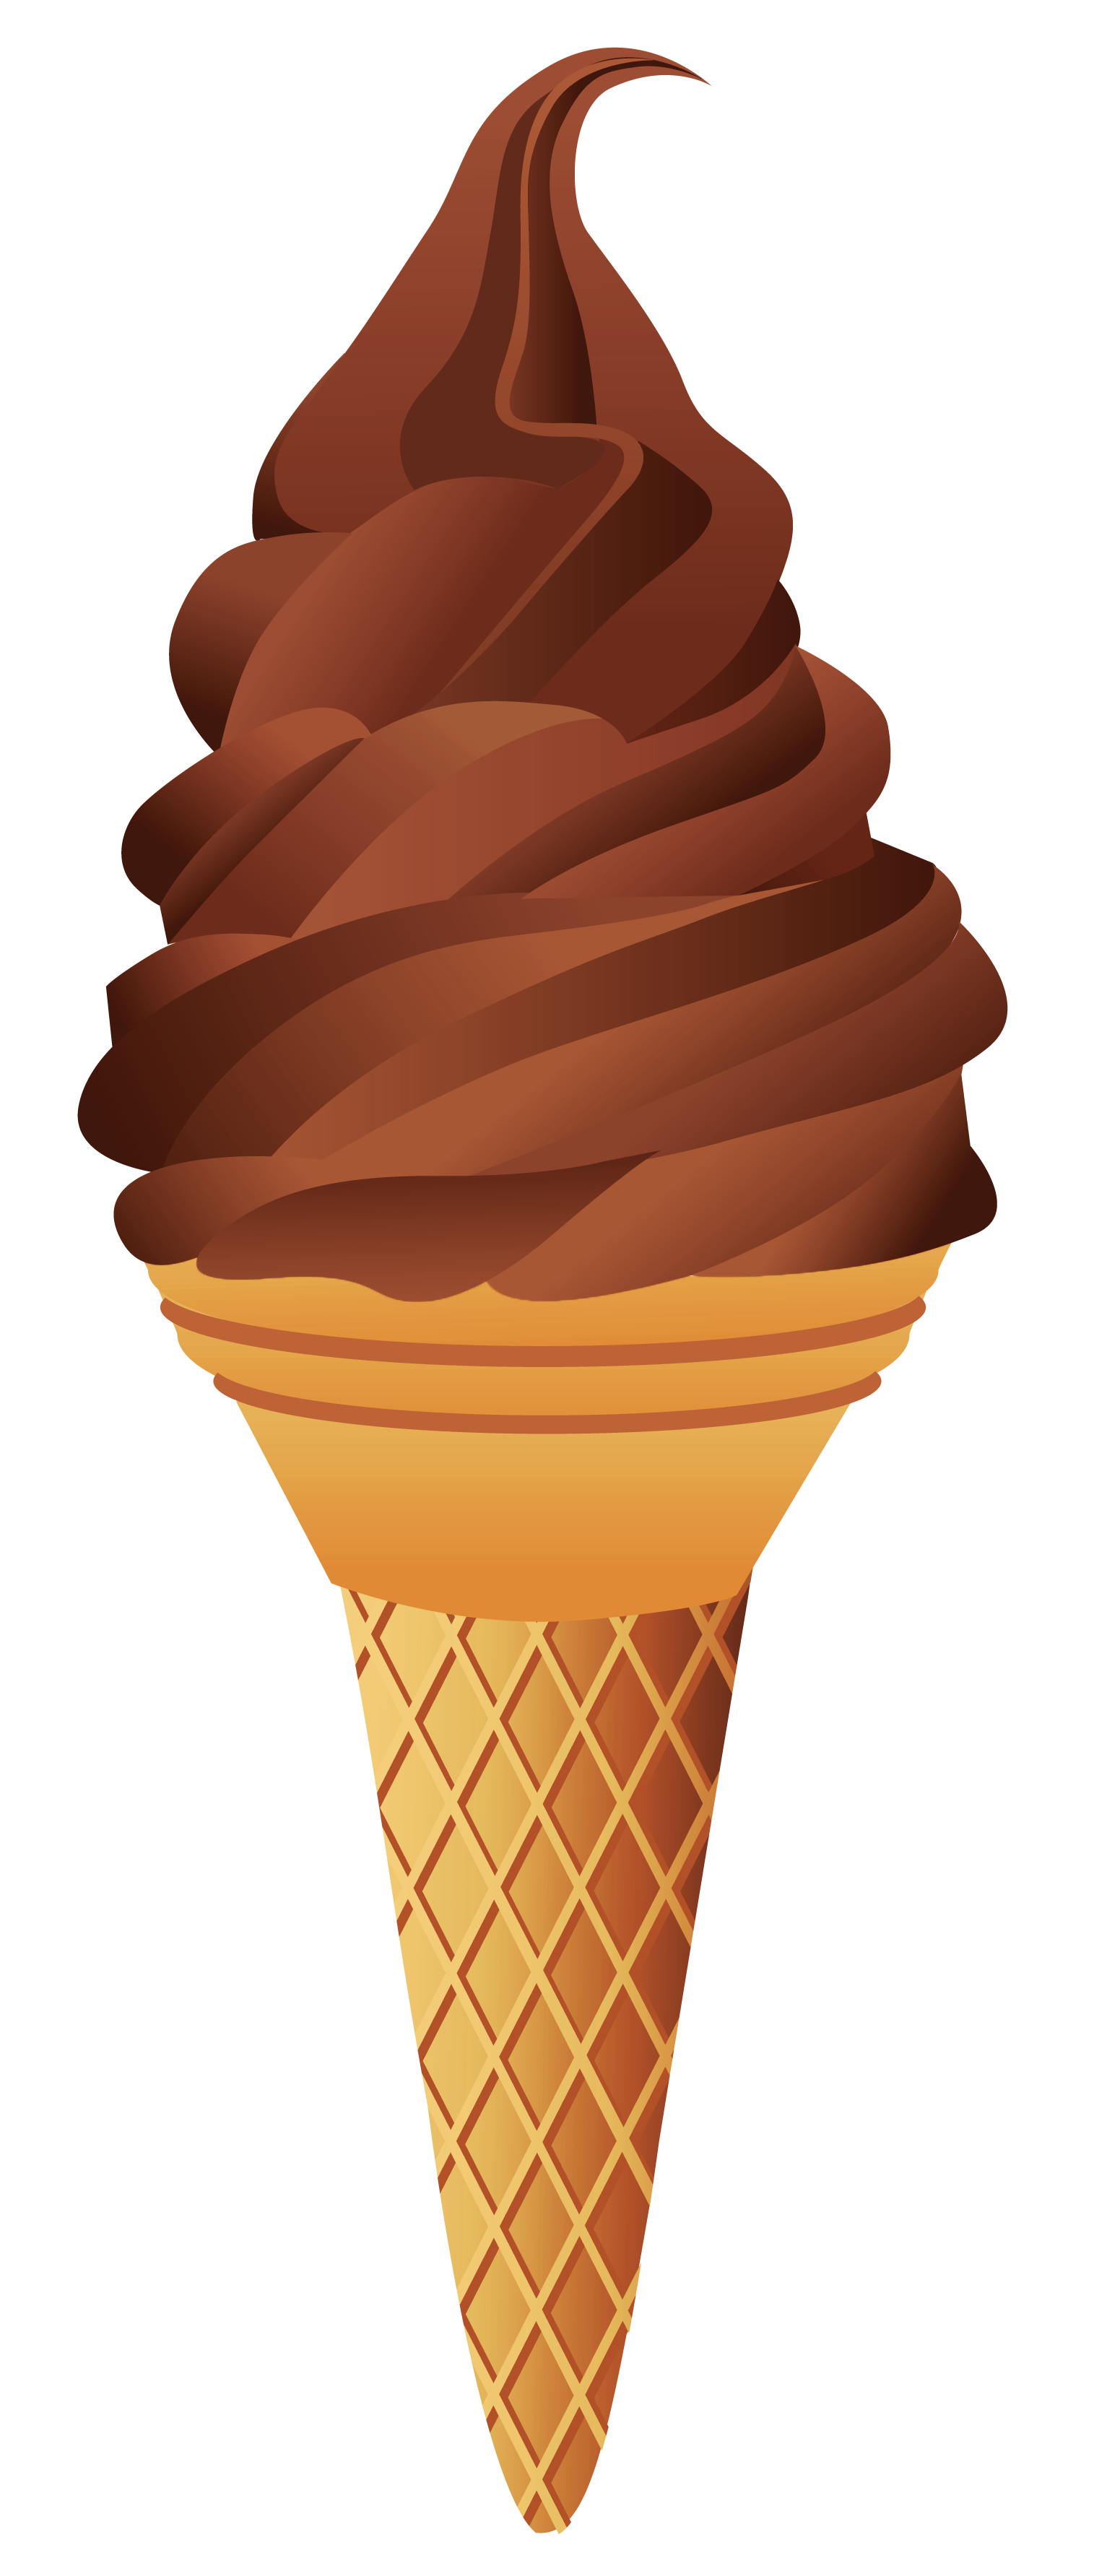 icecream clipart ice cream cone